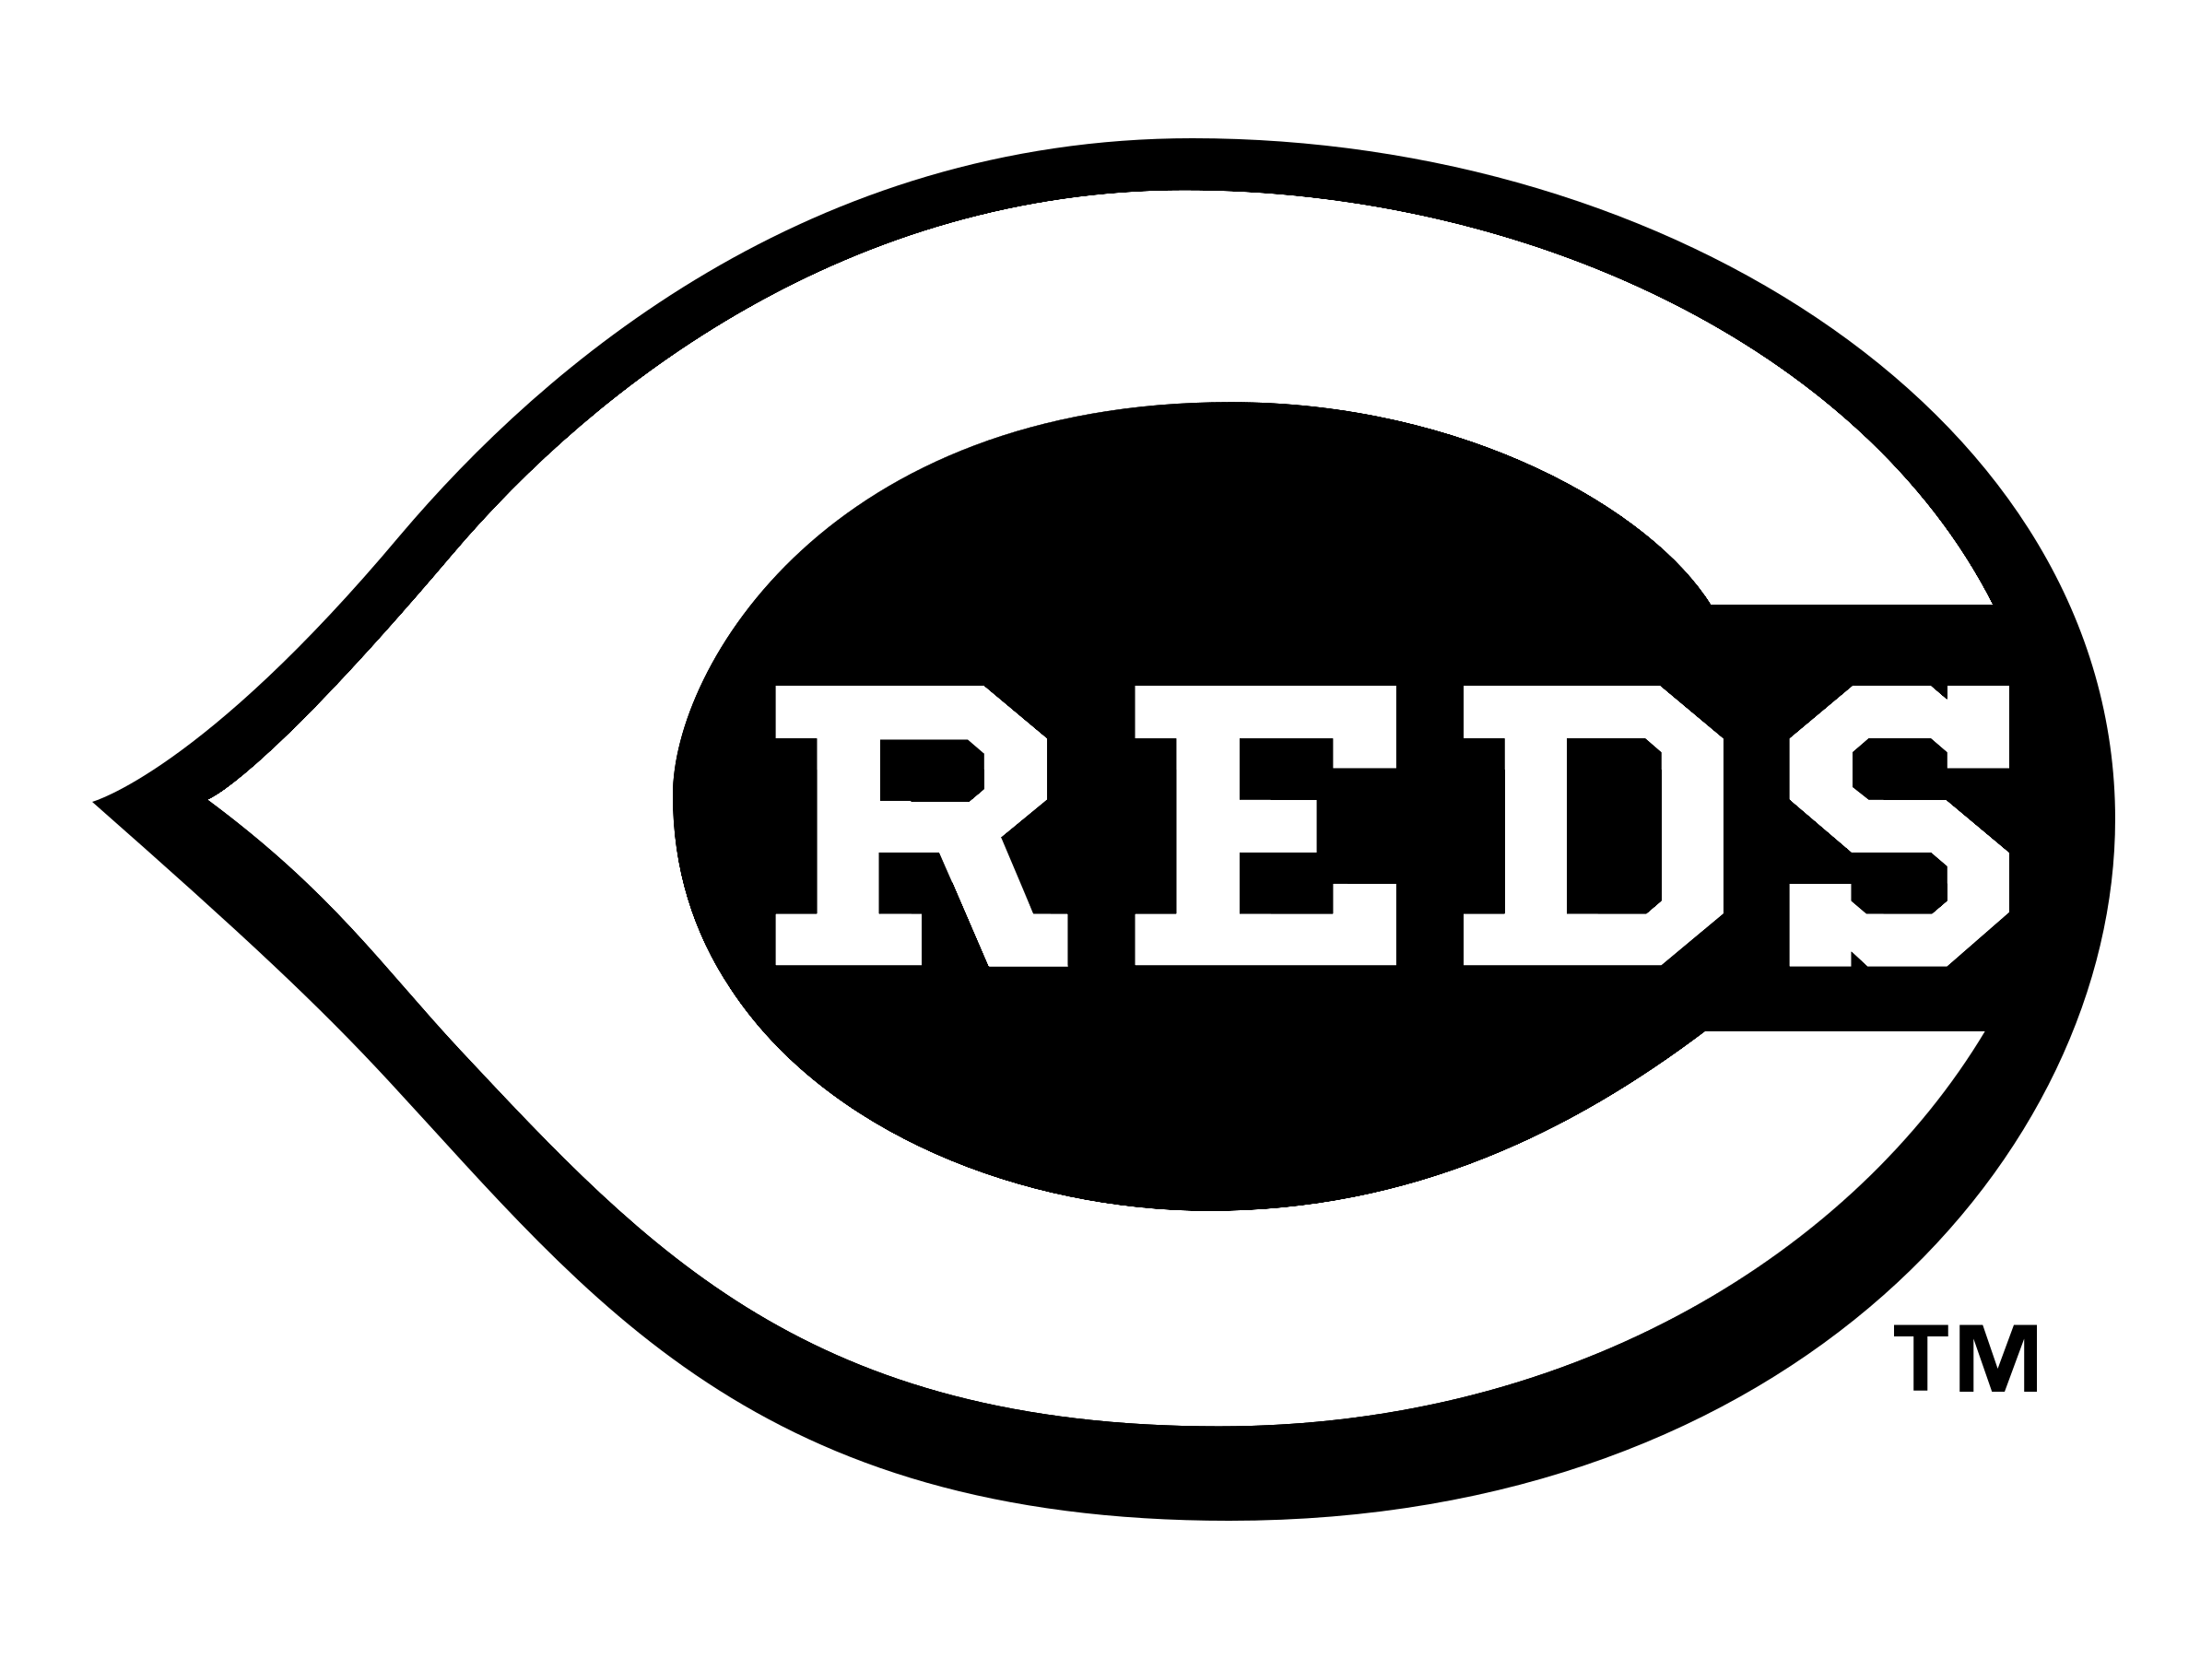 Cincinnati Reds Logo Vector -